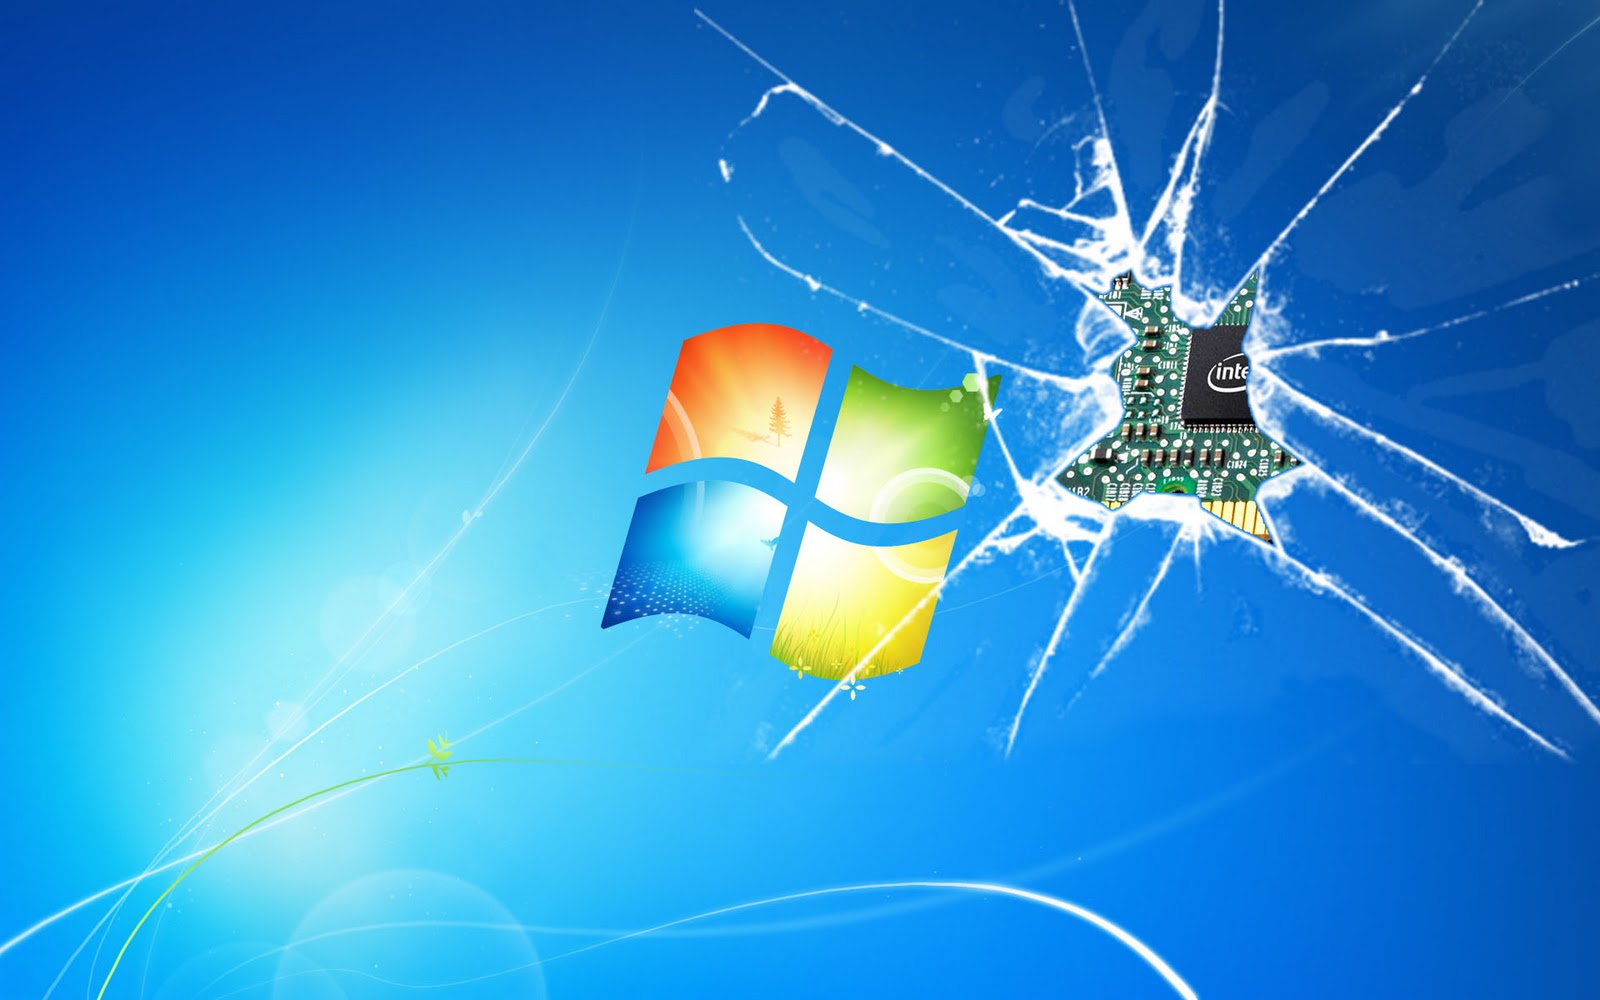 factorio download windows 7 cracked